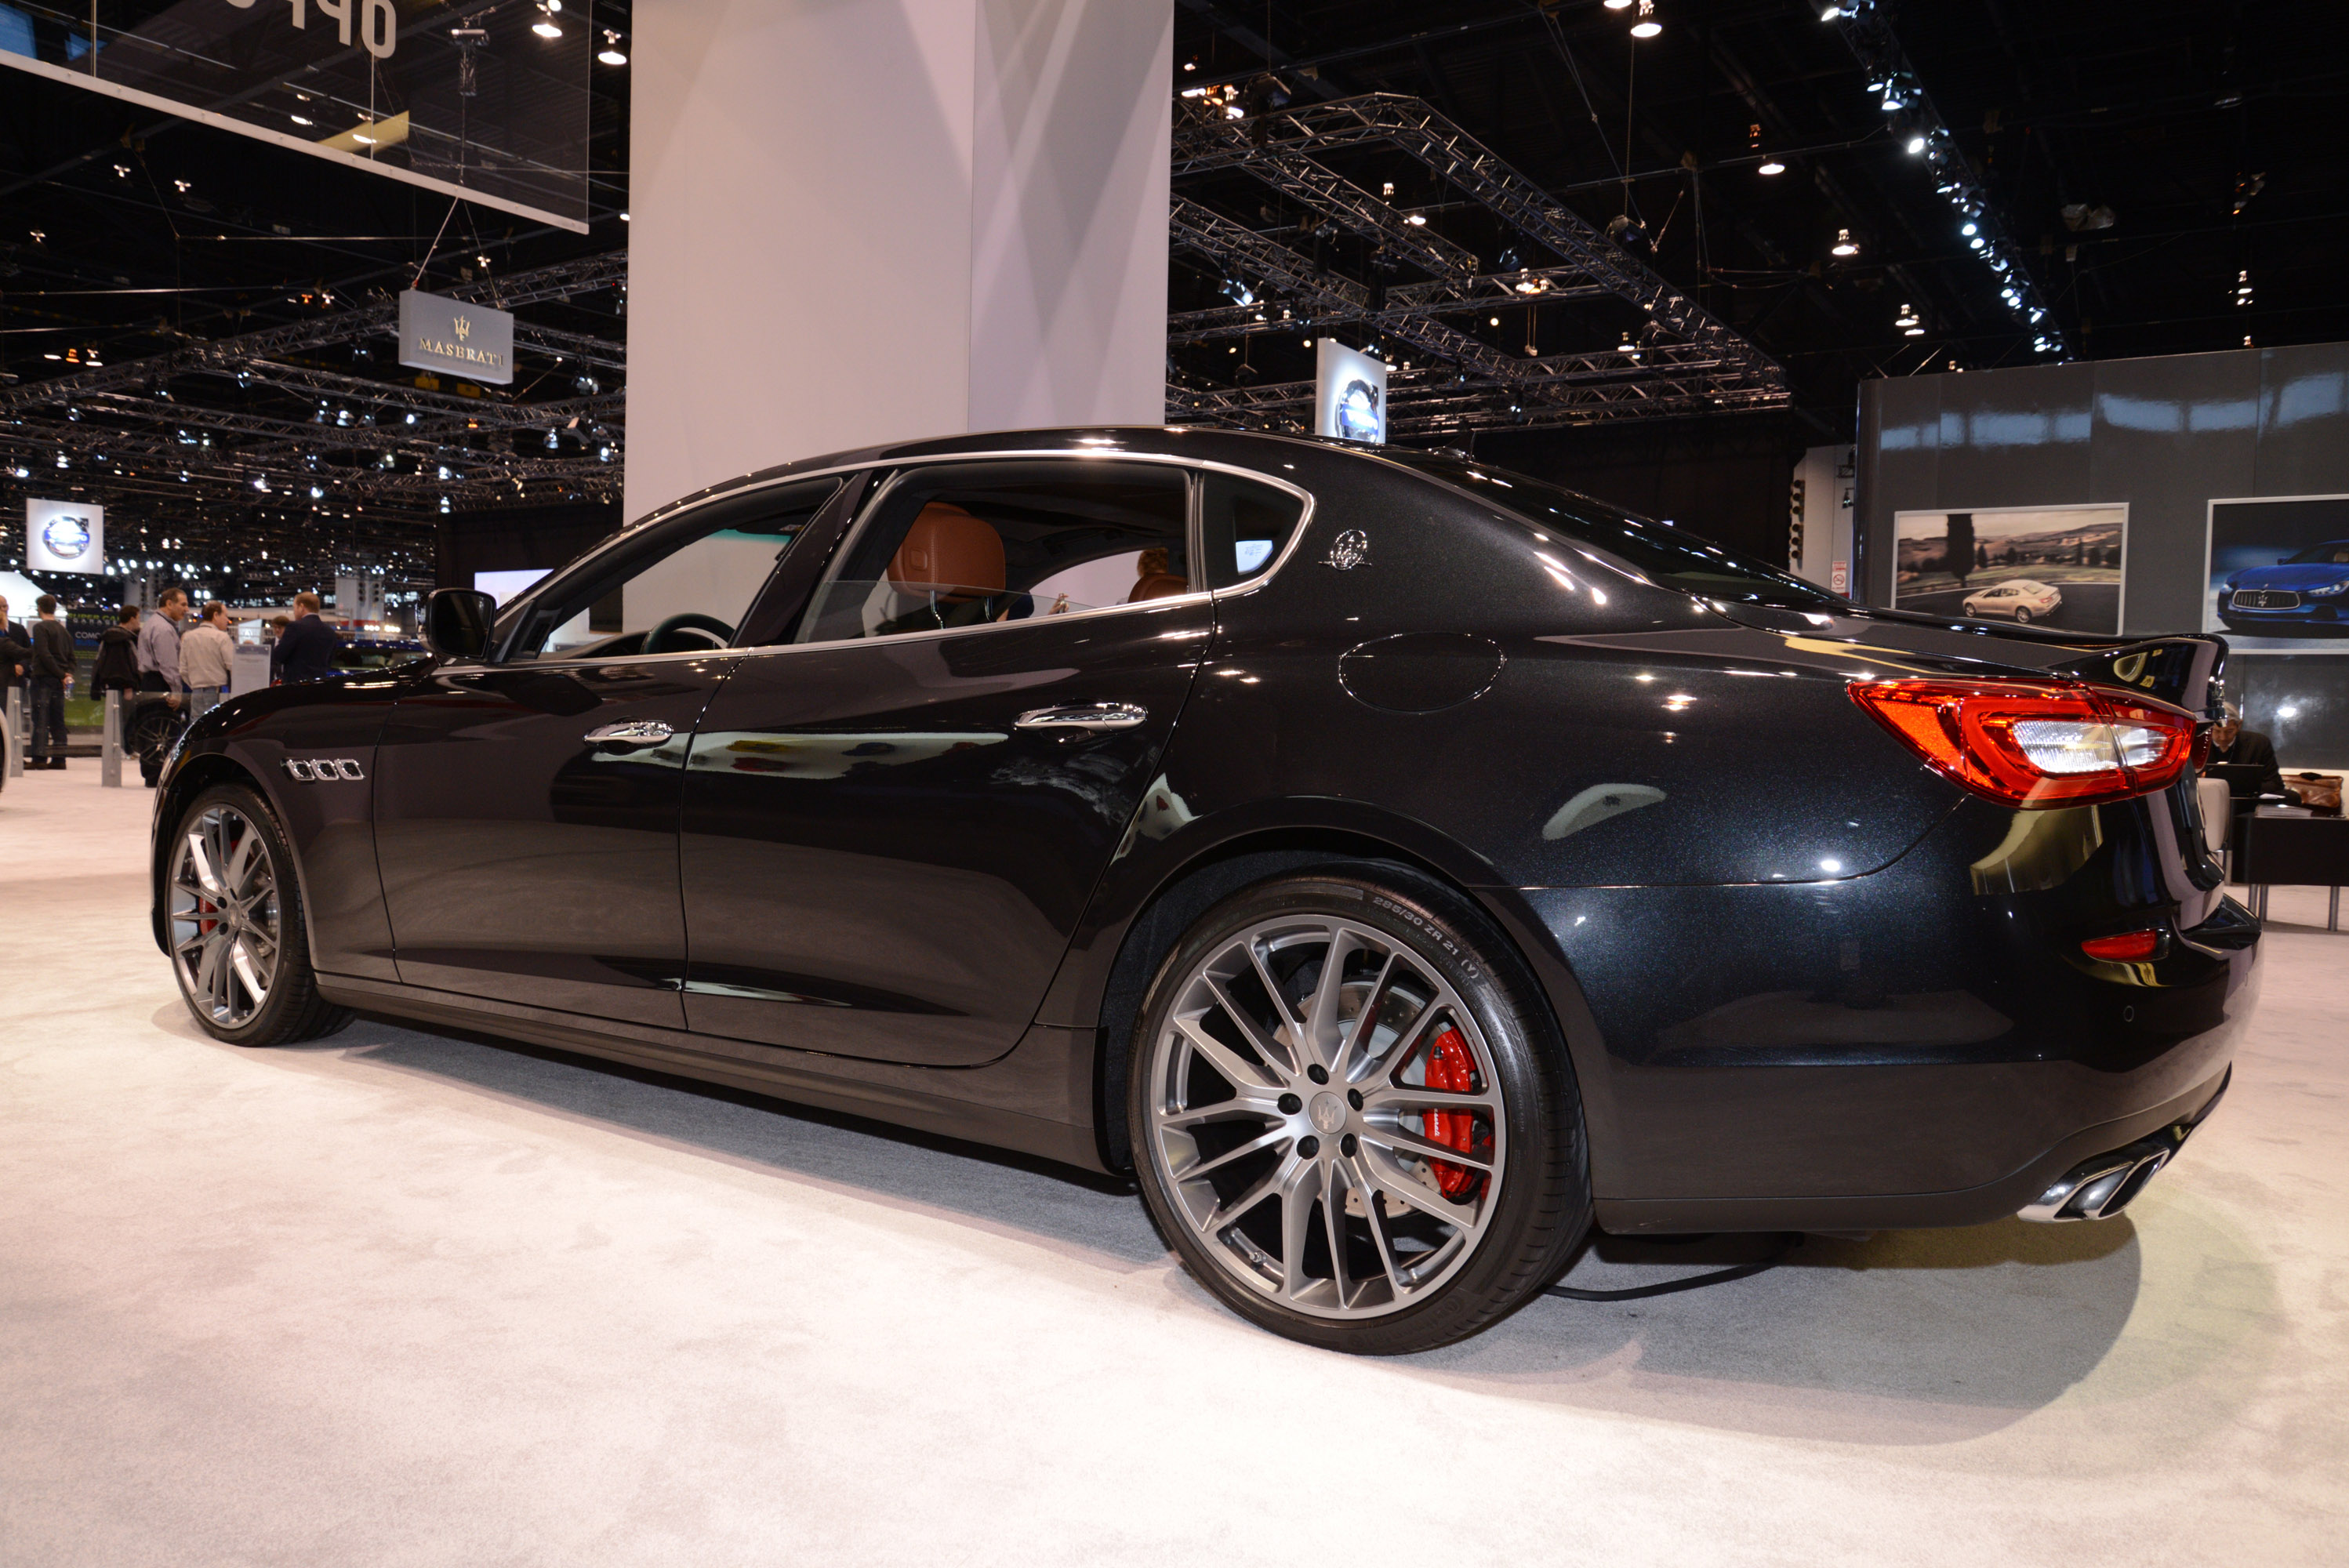 Maserati Quattroporte Chicago